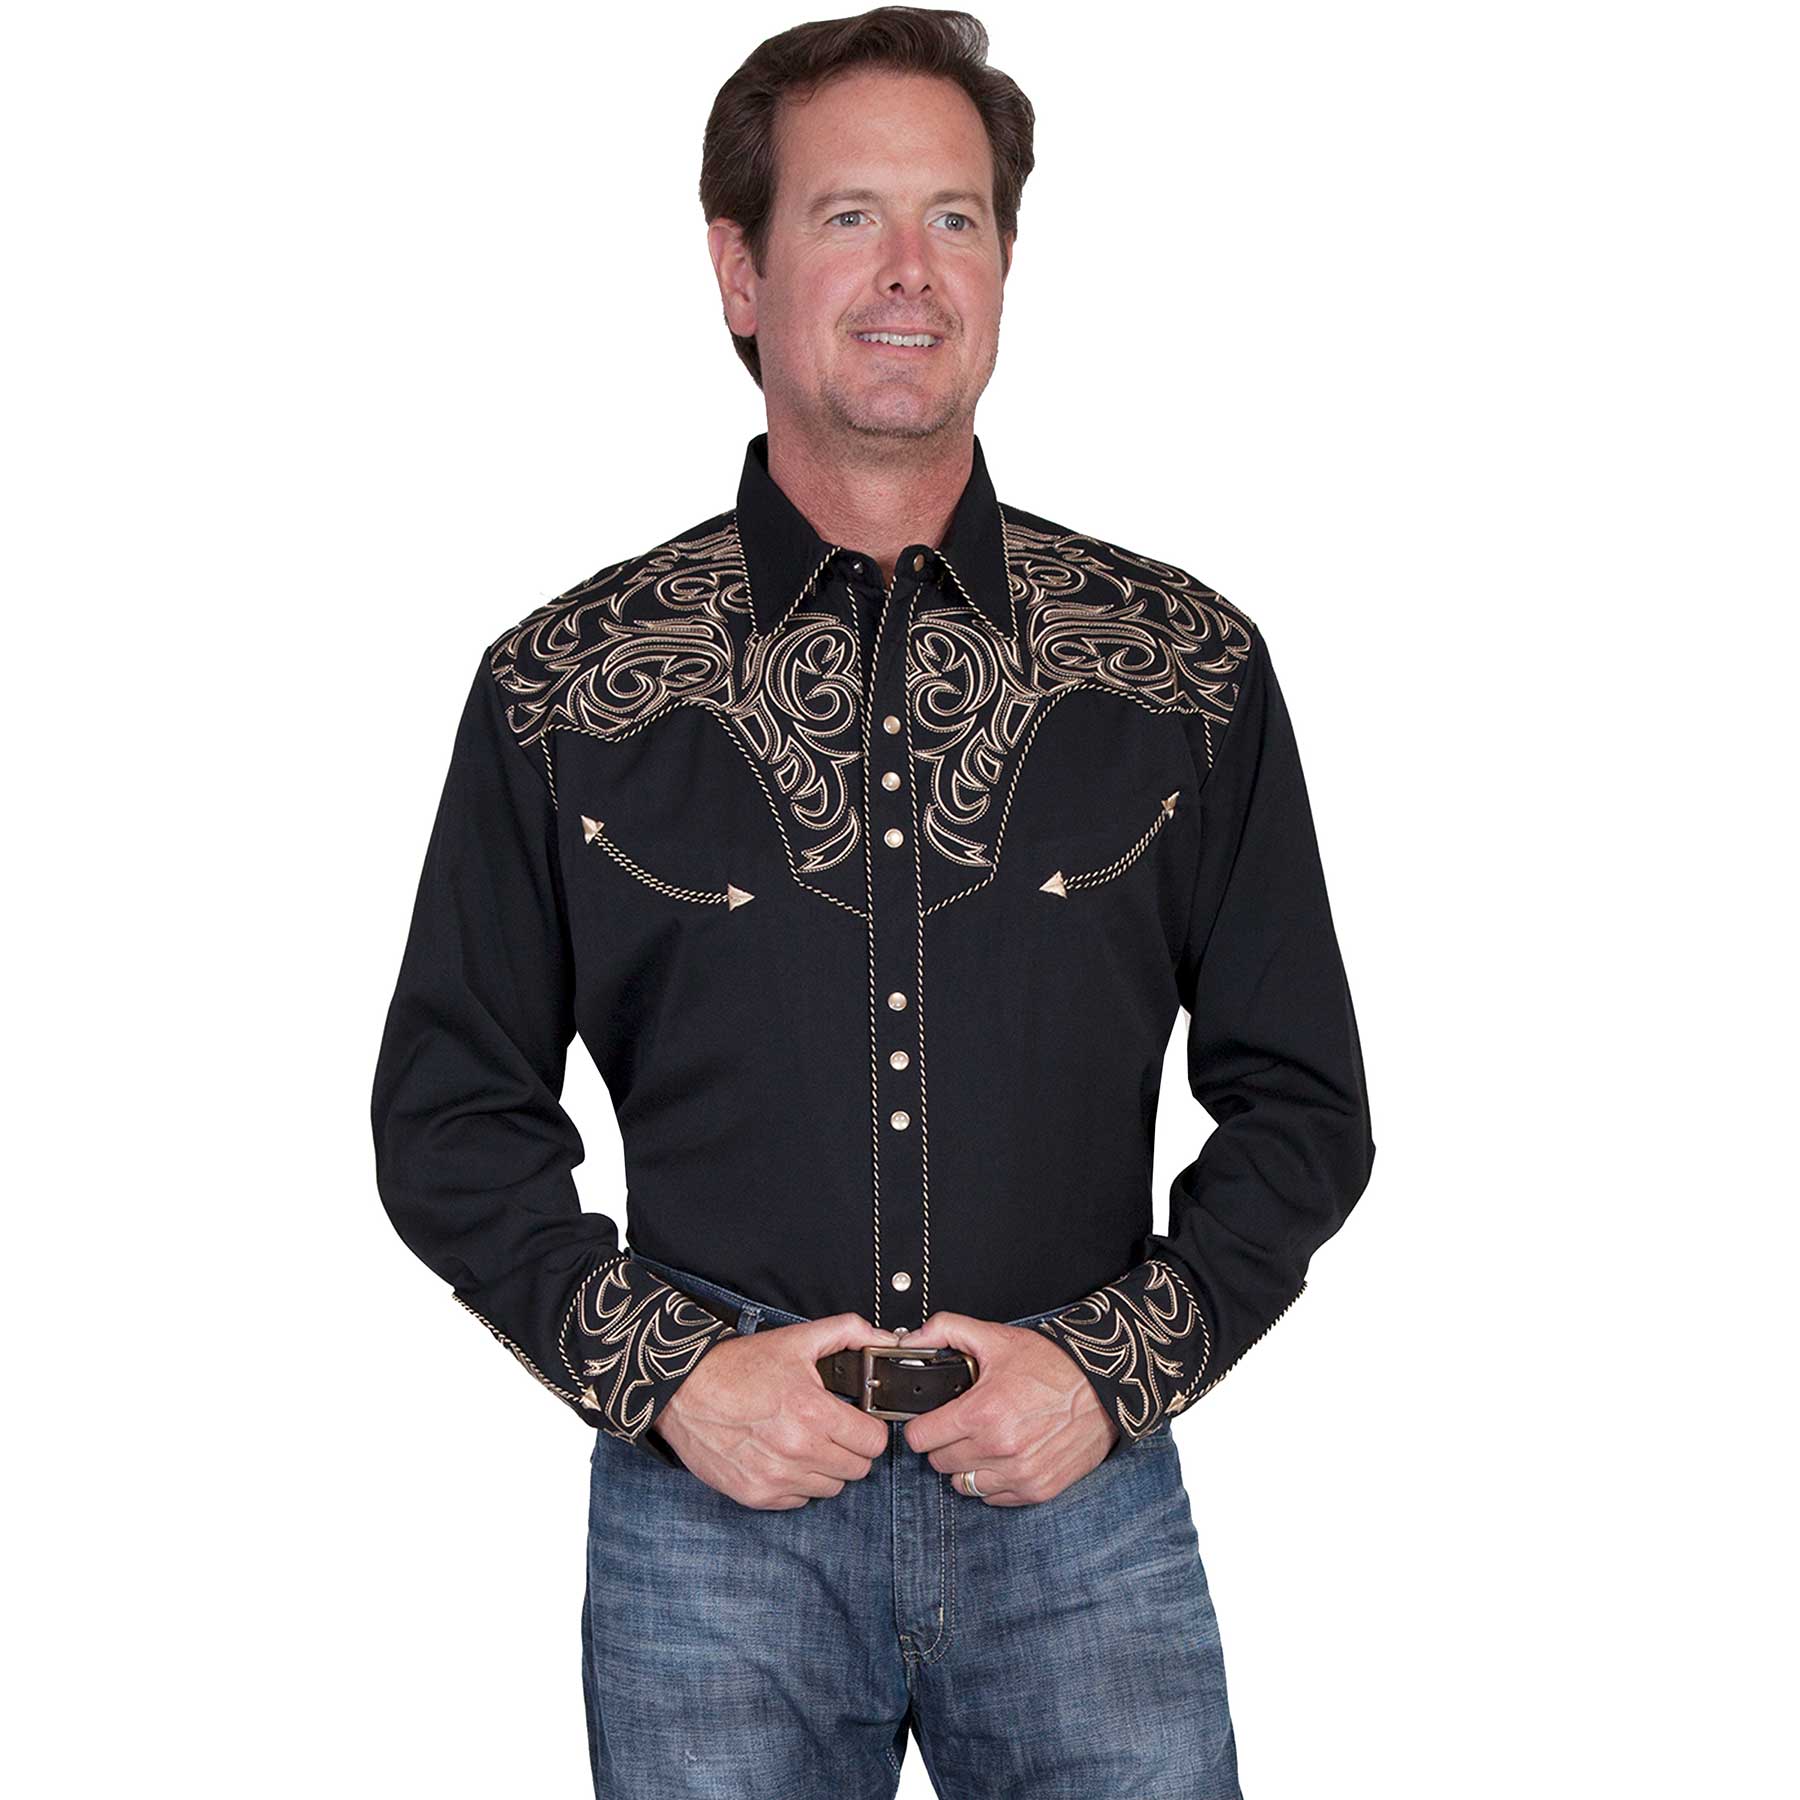 Pungo Ridge - Scully Men's Western Shirt w/Embroidered Scrolls - Black ...